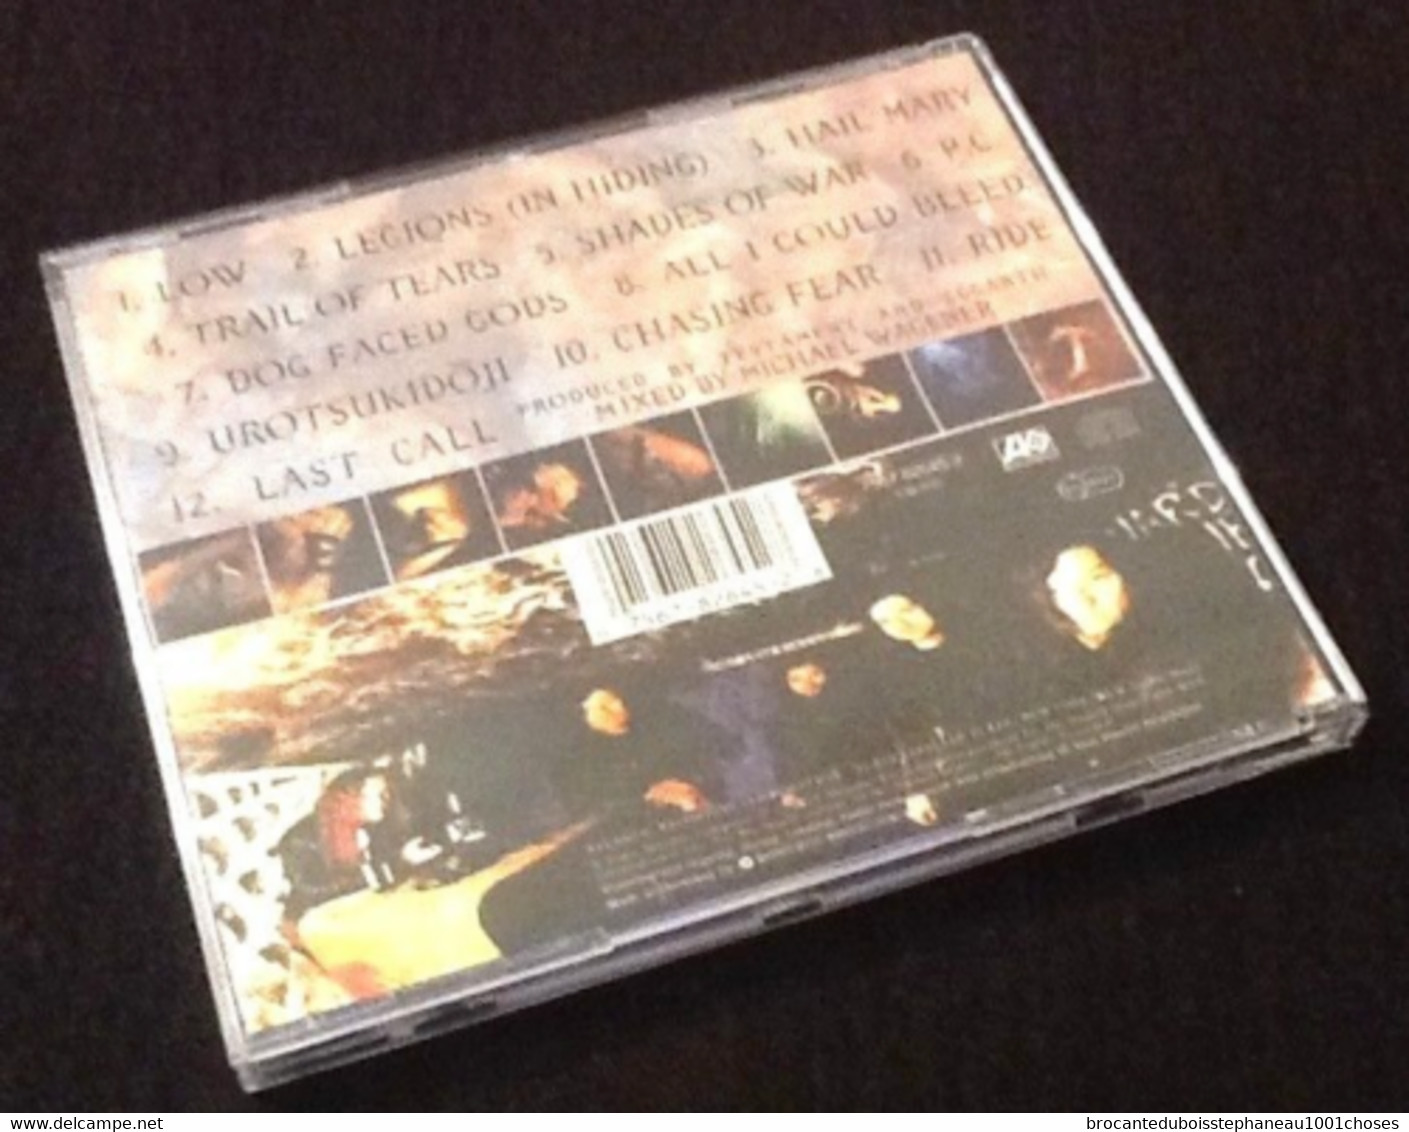 Album CD  Testament  Low (1994) 7567 82645 2 - Hard Rock En Metal